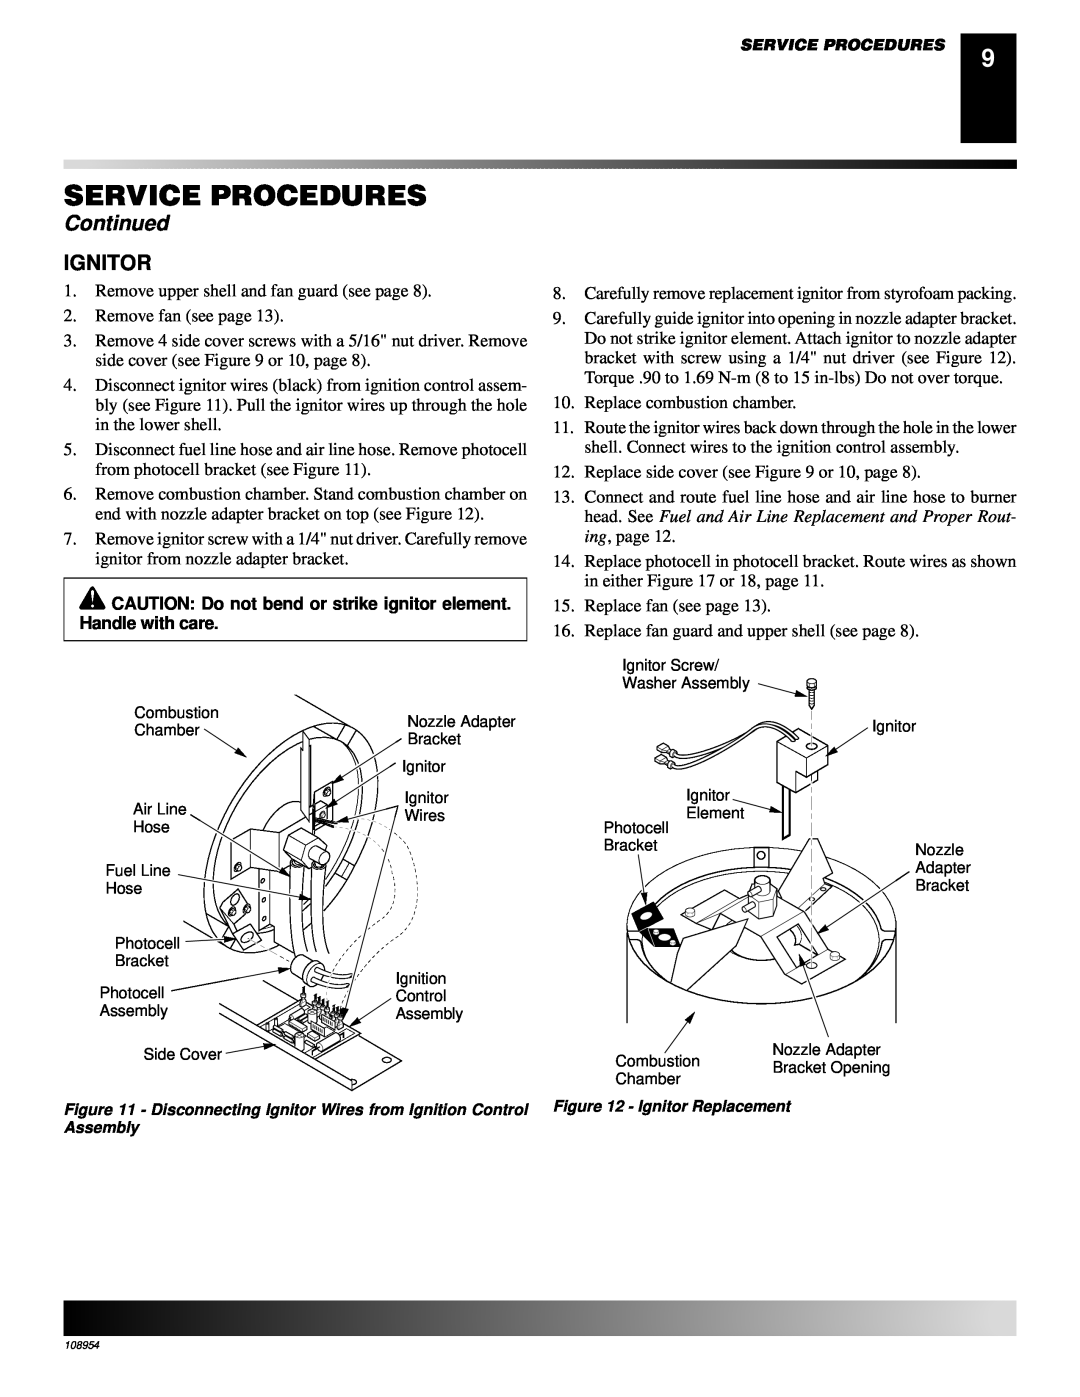 Desa GK30, GK20 owner manual Ignitor, Service Procedures, Continued 